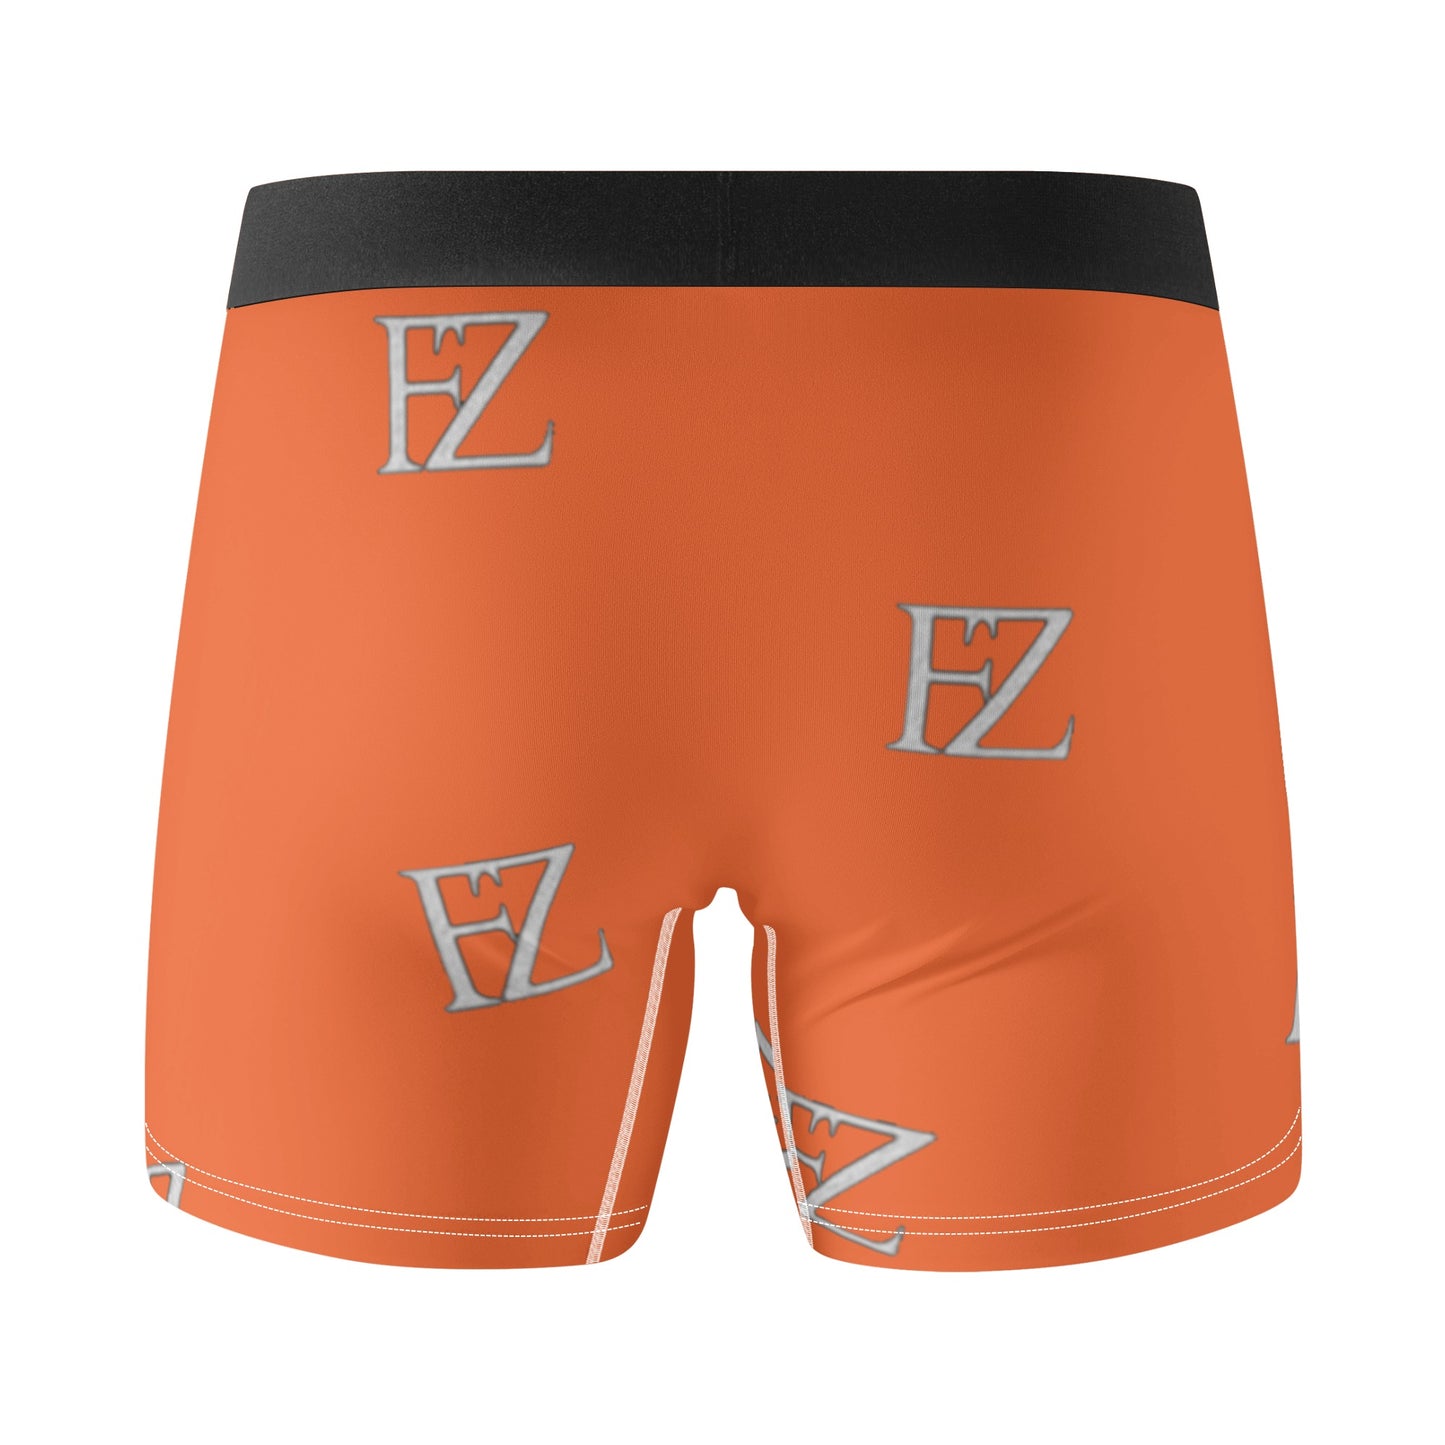 FZ Men's Trunks Boxer - FZwear